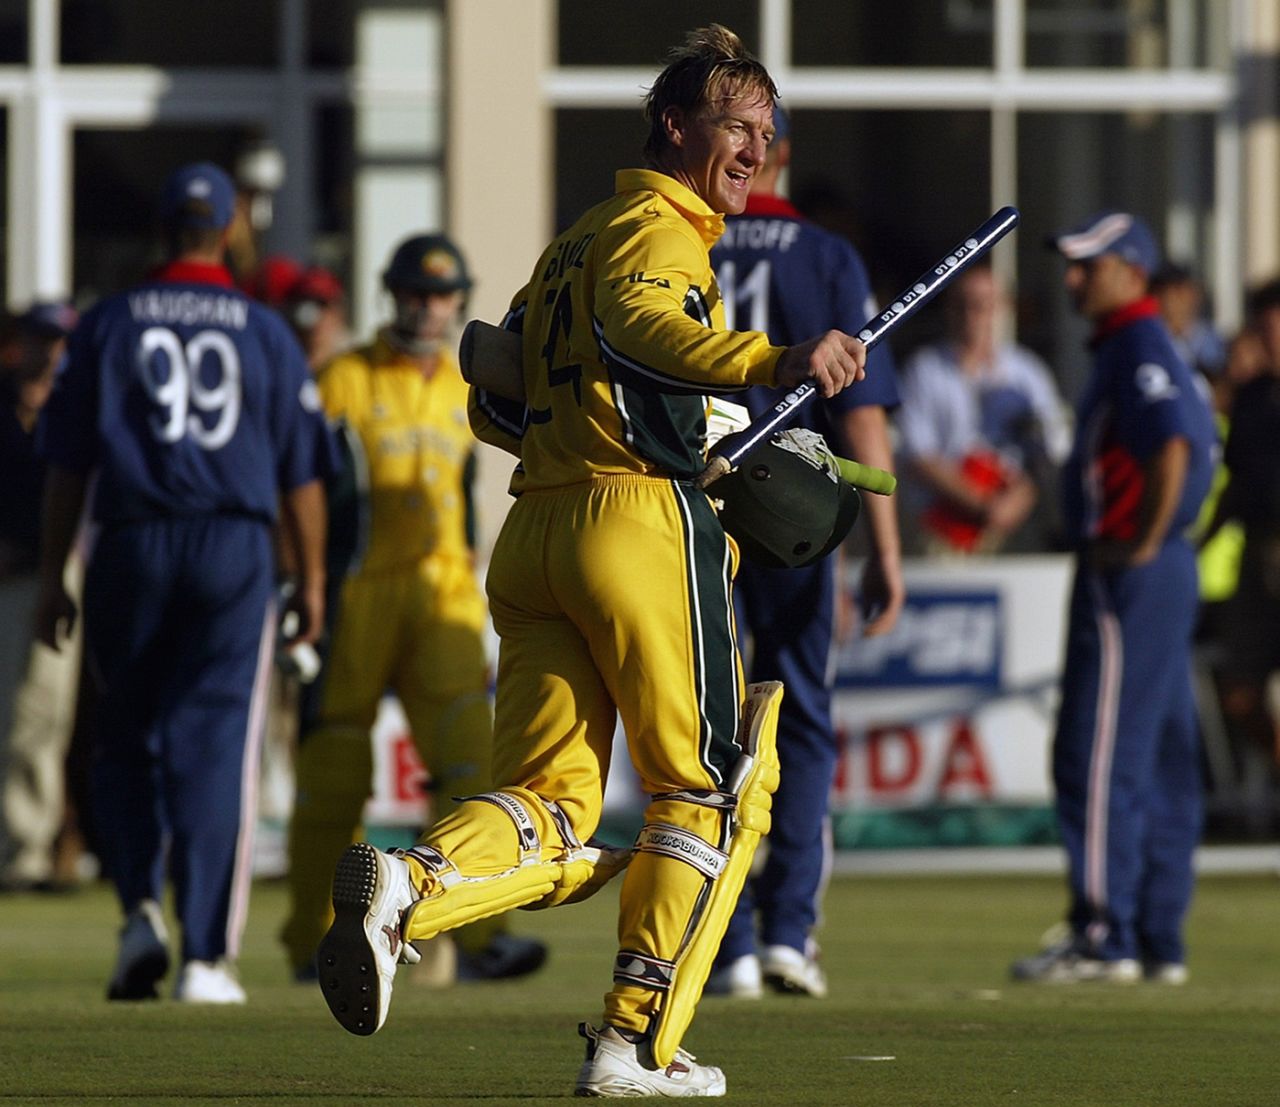 Andy Bichel runs holding a stump after Australia's victory, Australia v England, World Cup, Port Elizabeth, March 2, 2003